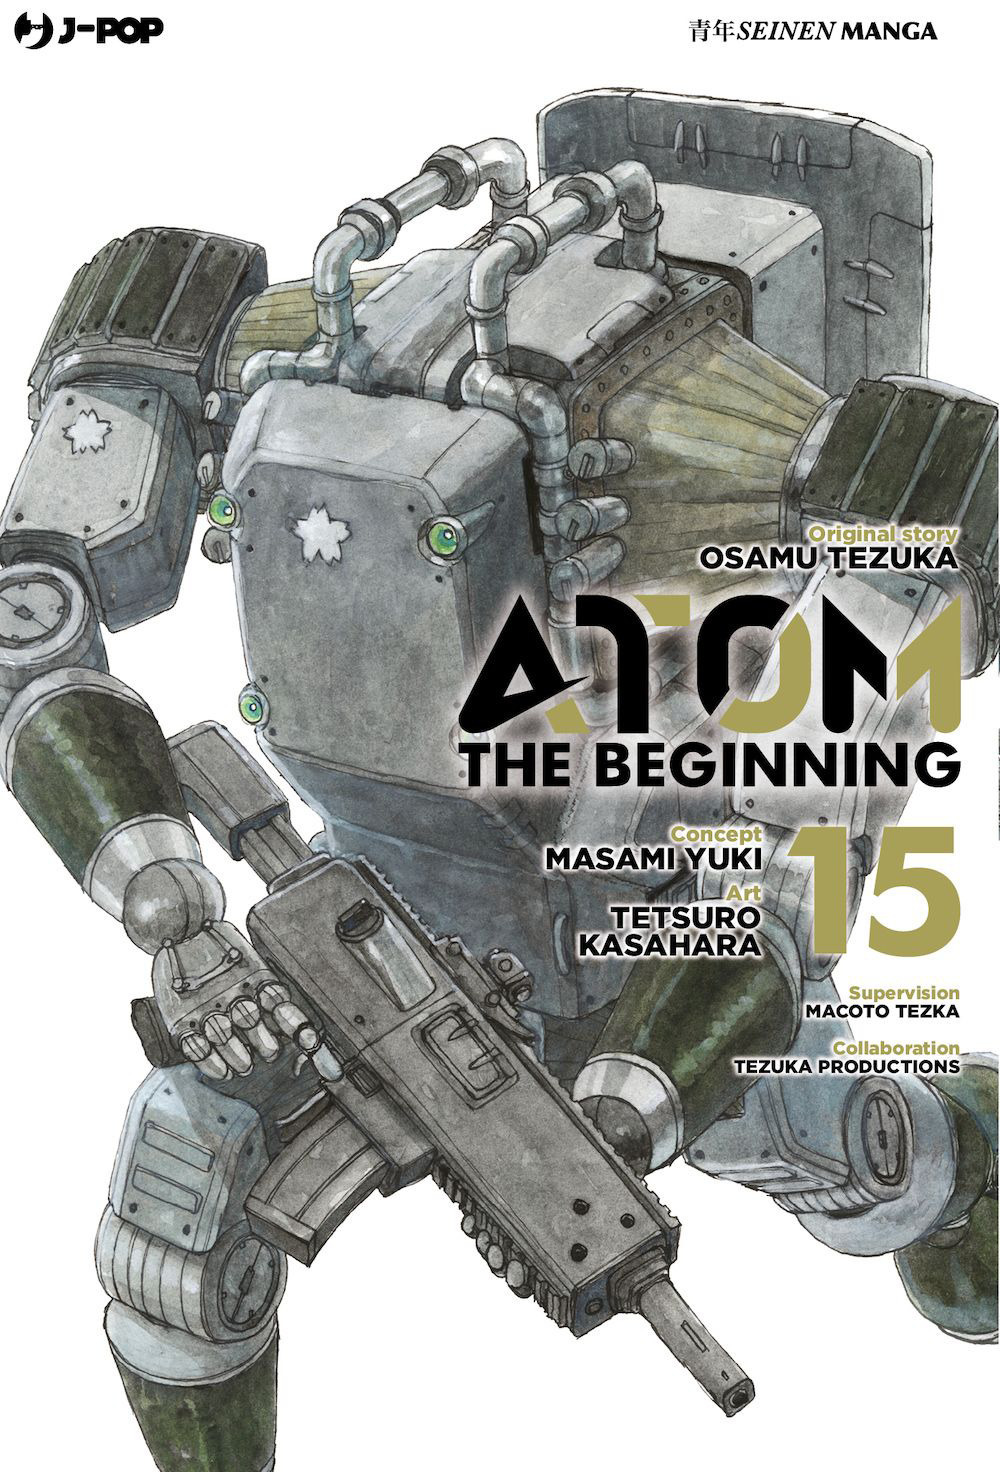 Atom. The beginning. Vol. 15